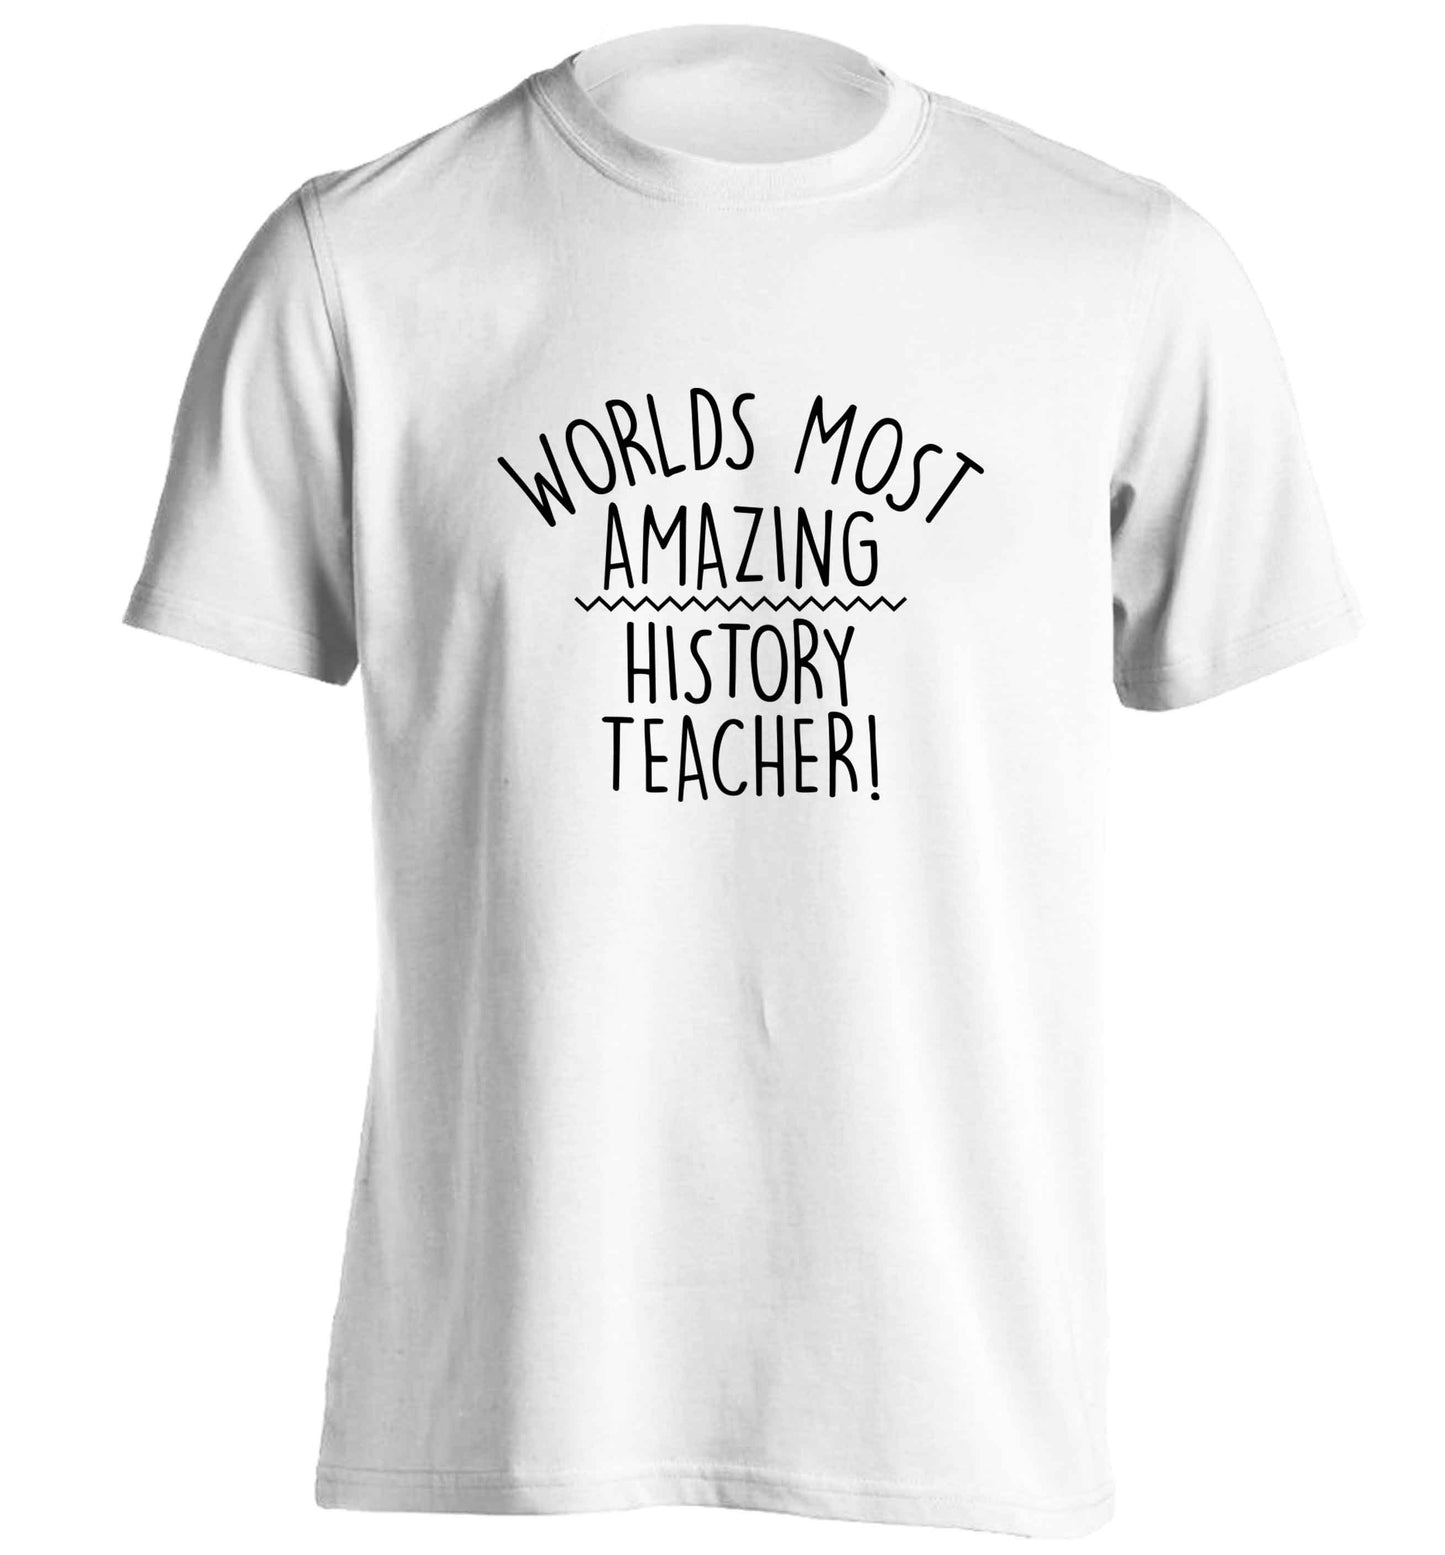 Worlds most amazing History teacher adults unisex white Tshirt 2XL